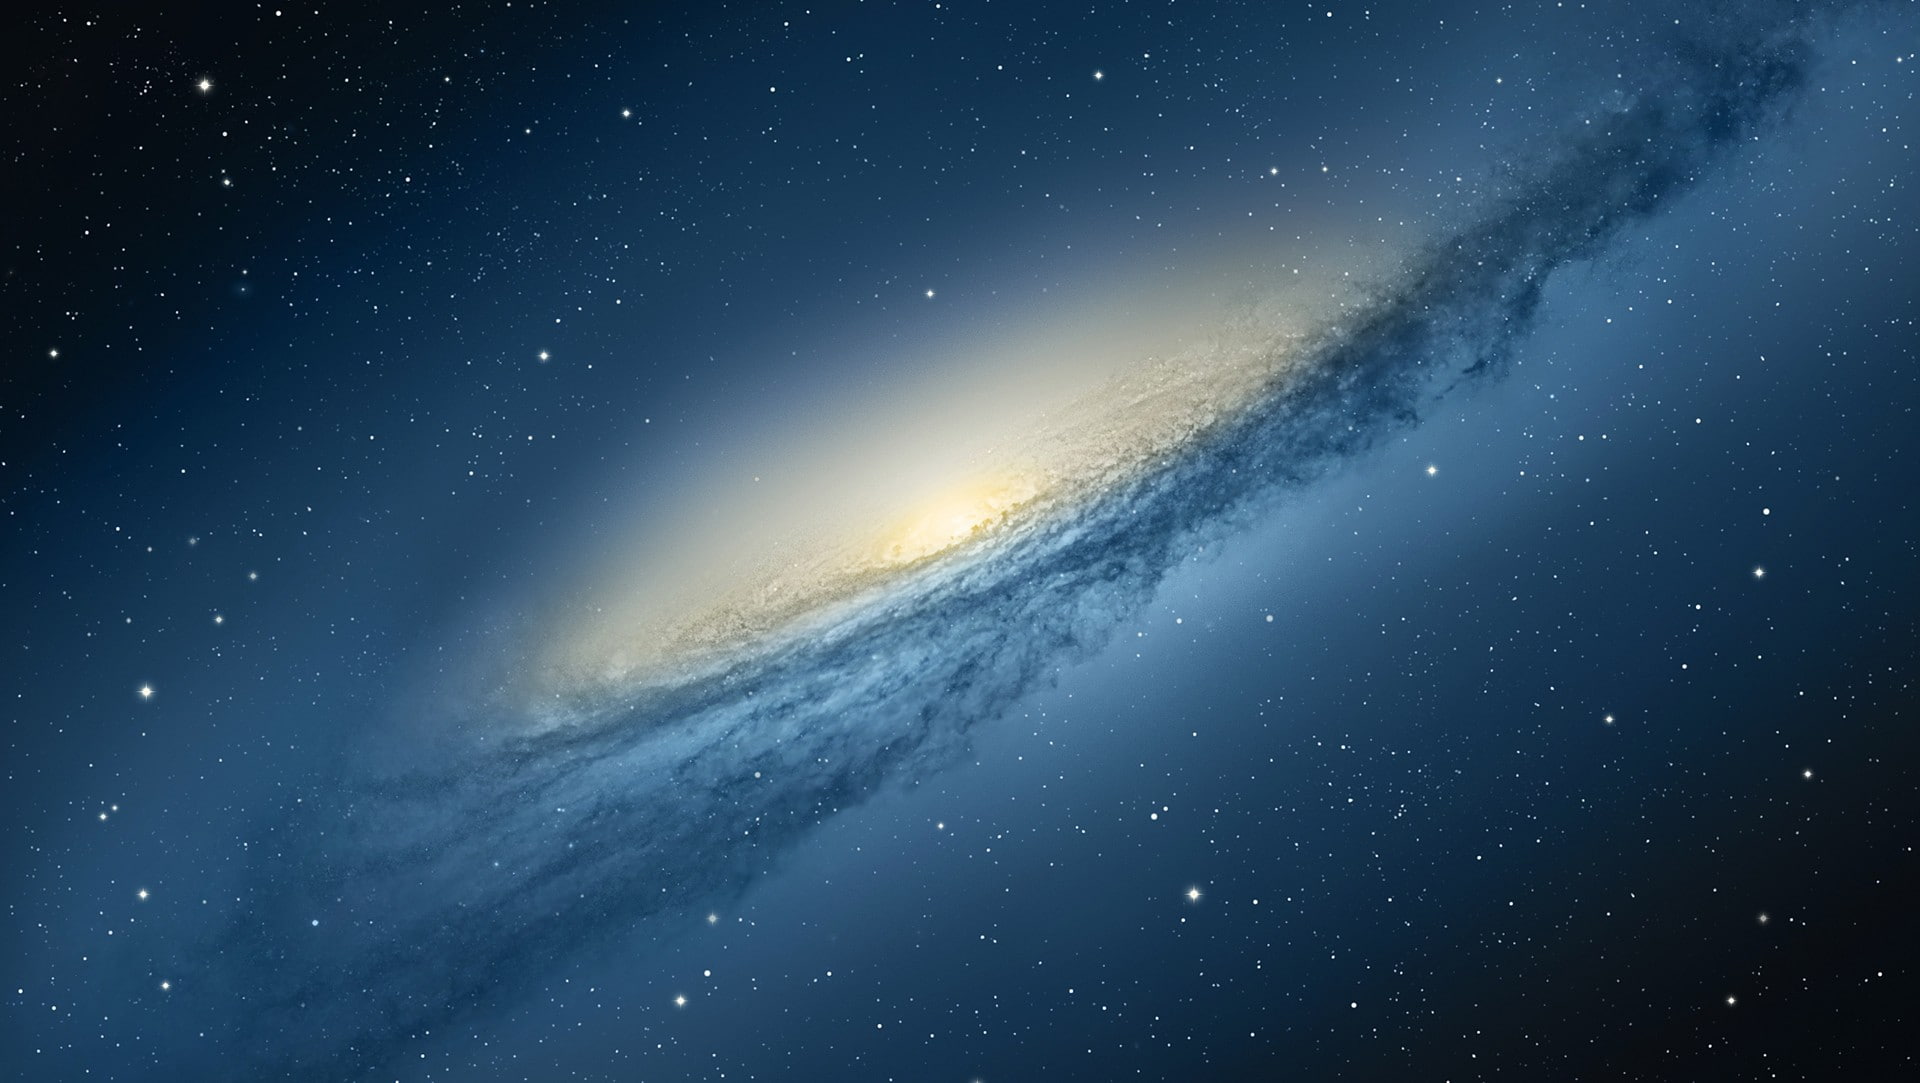 galaxy, space, spiral galaxy, NGC 3190, star - space, sky, night